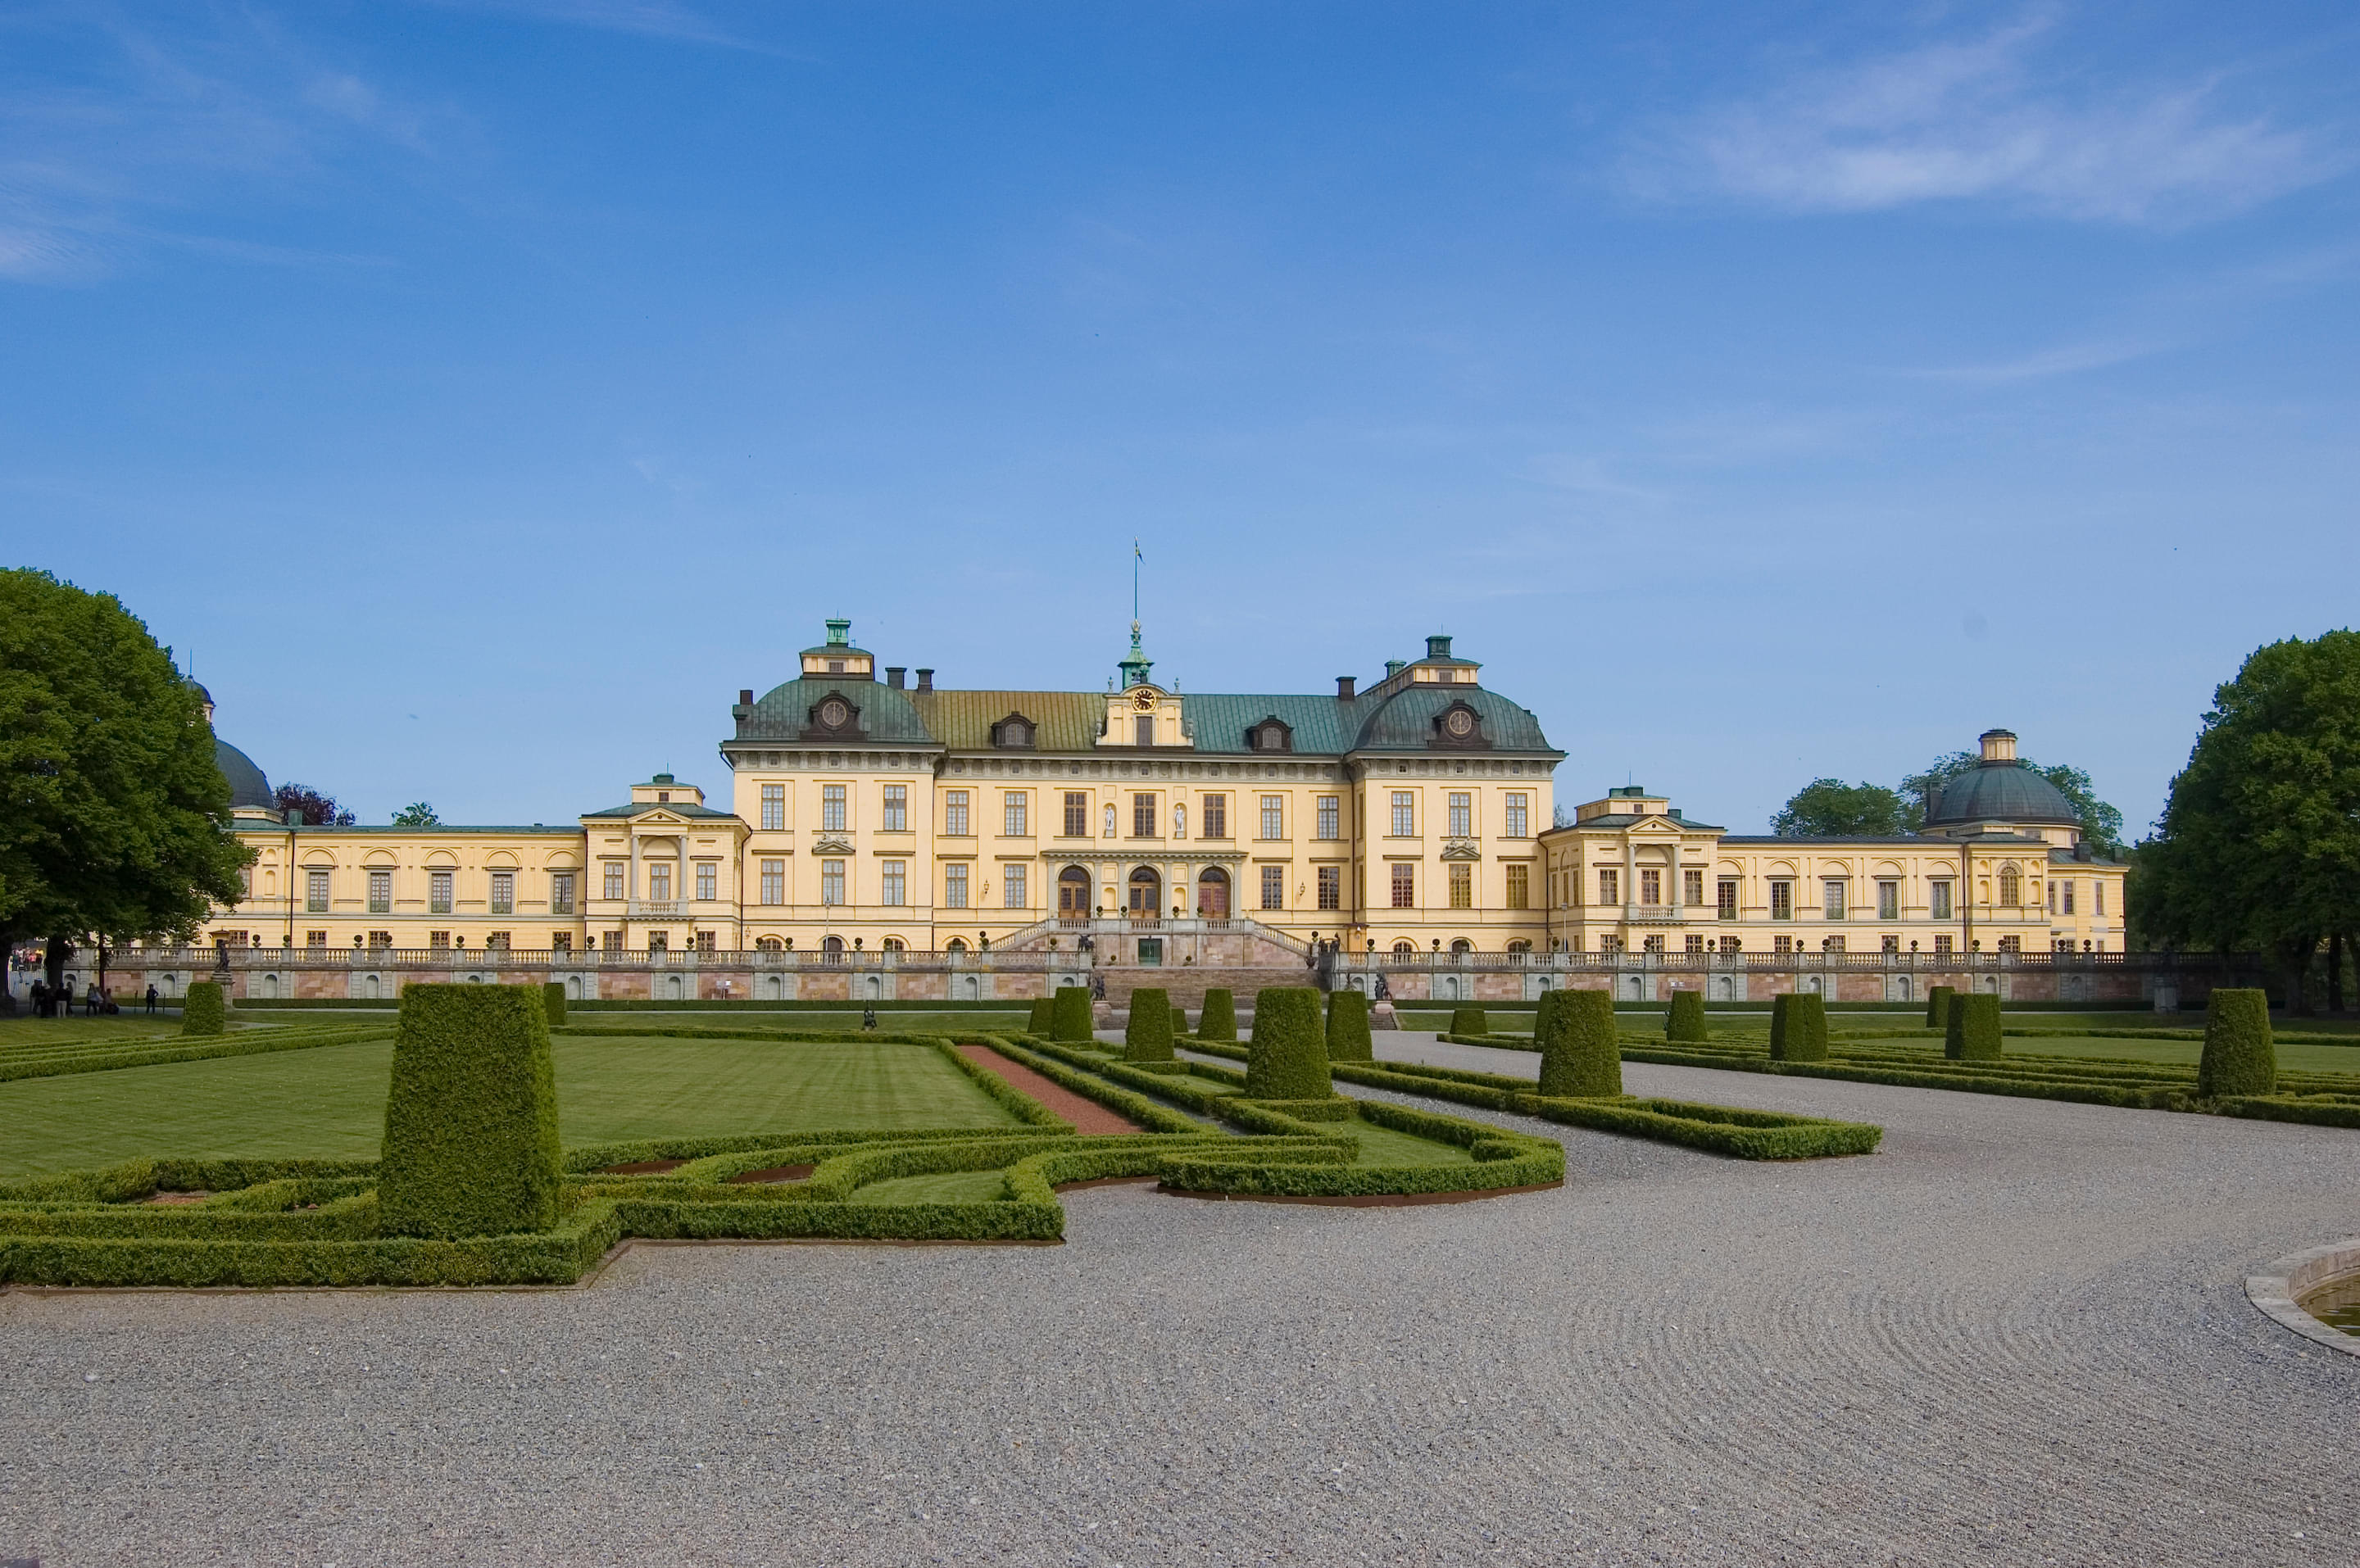 Drottningholm Palace Overview